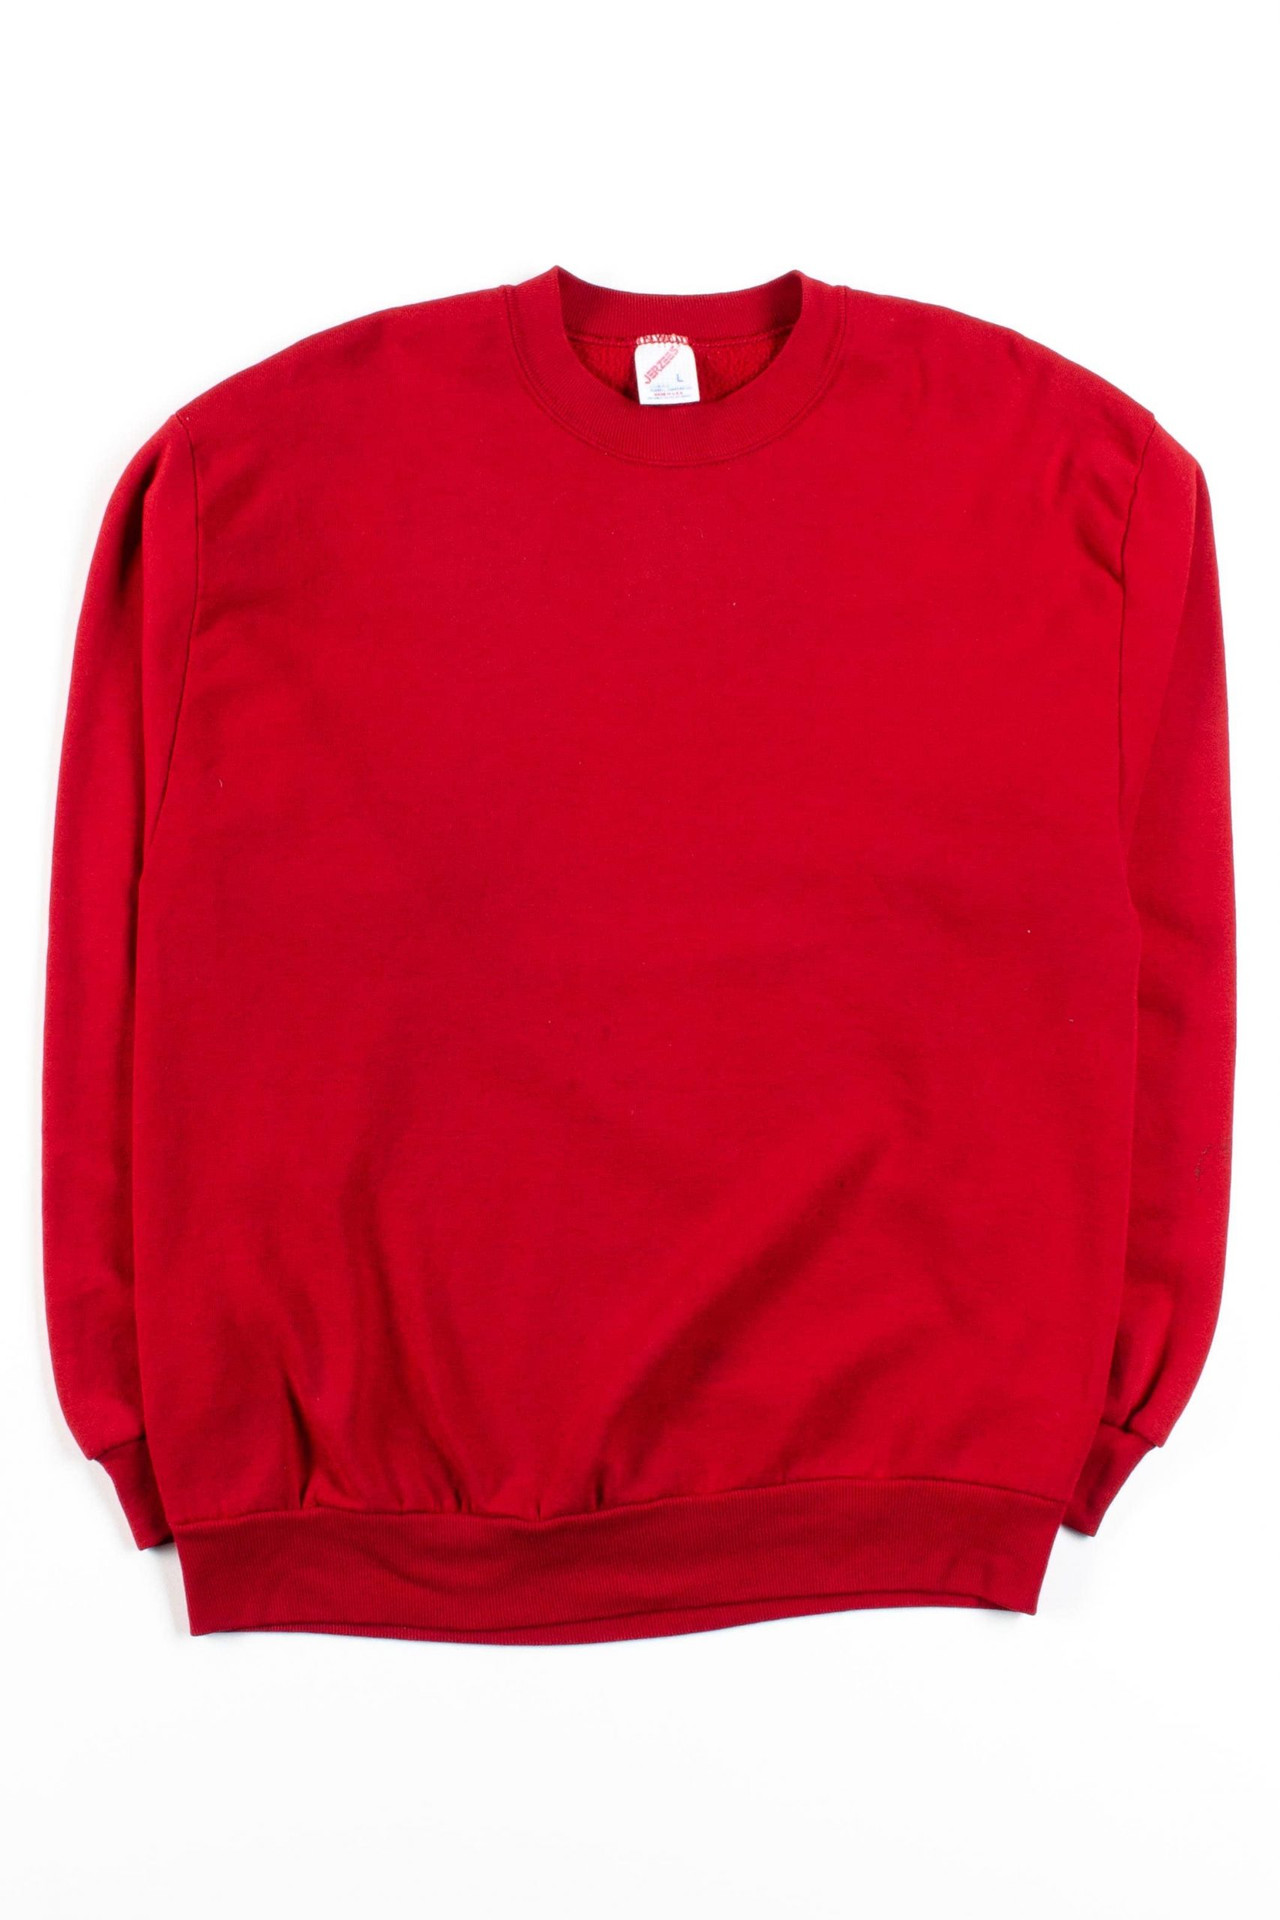 Vintage Plain Magenta Sweatshirt - Ragstock.com